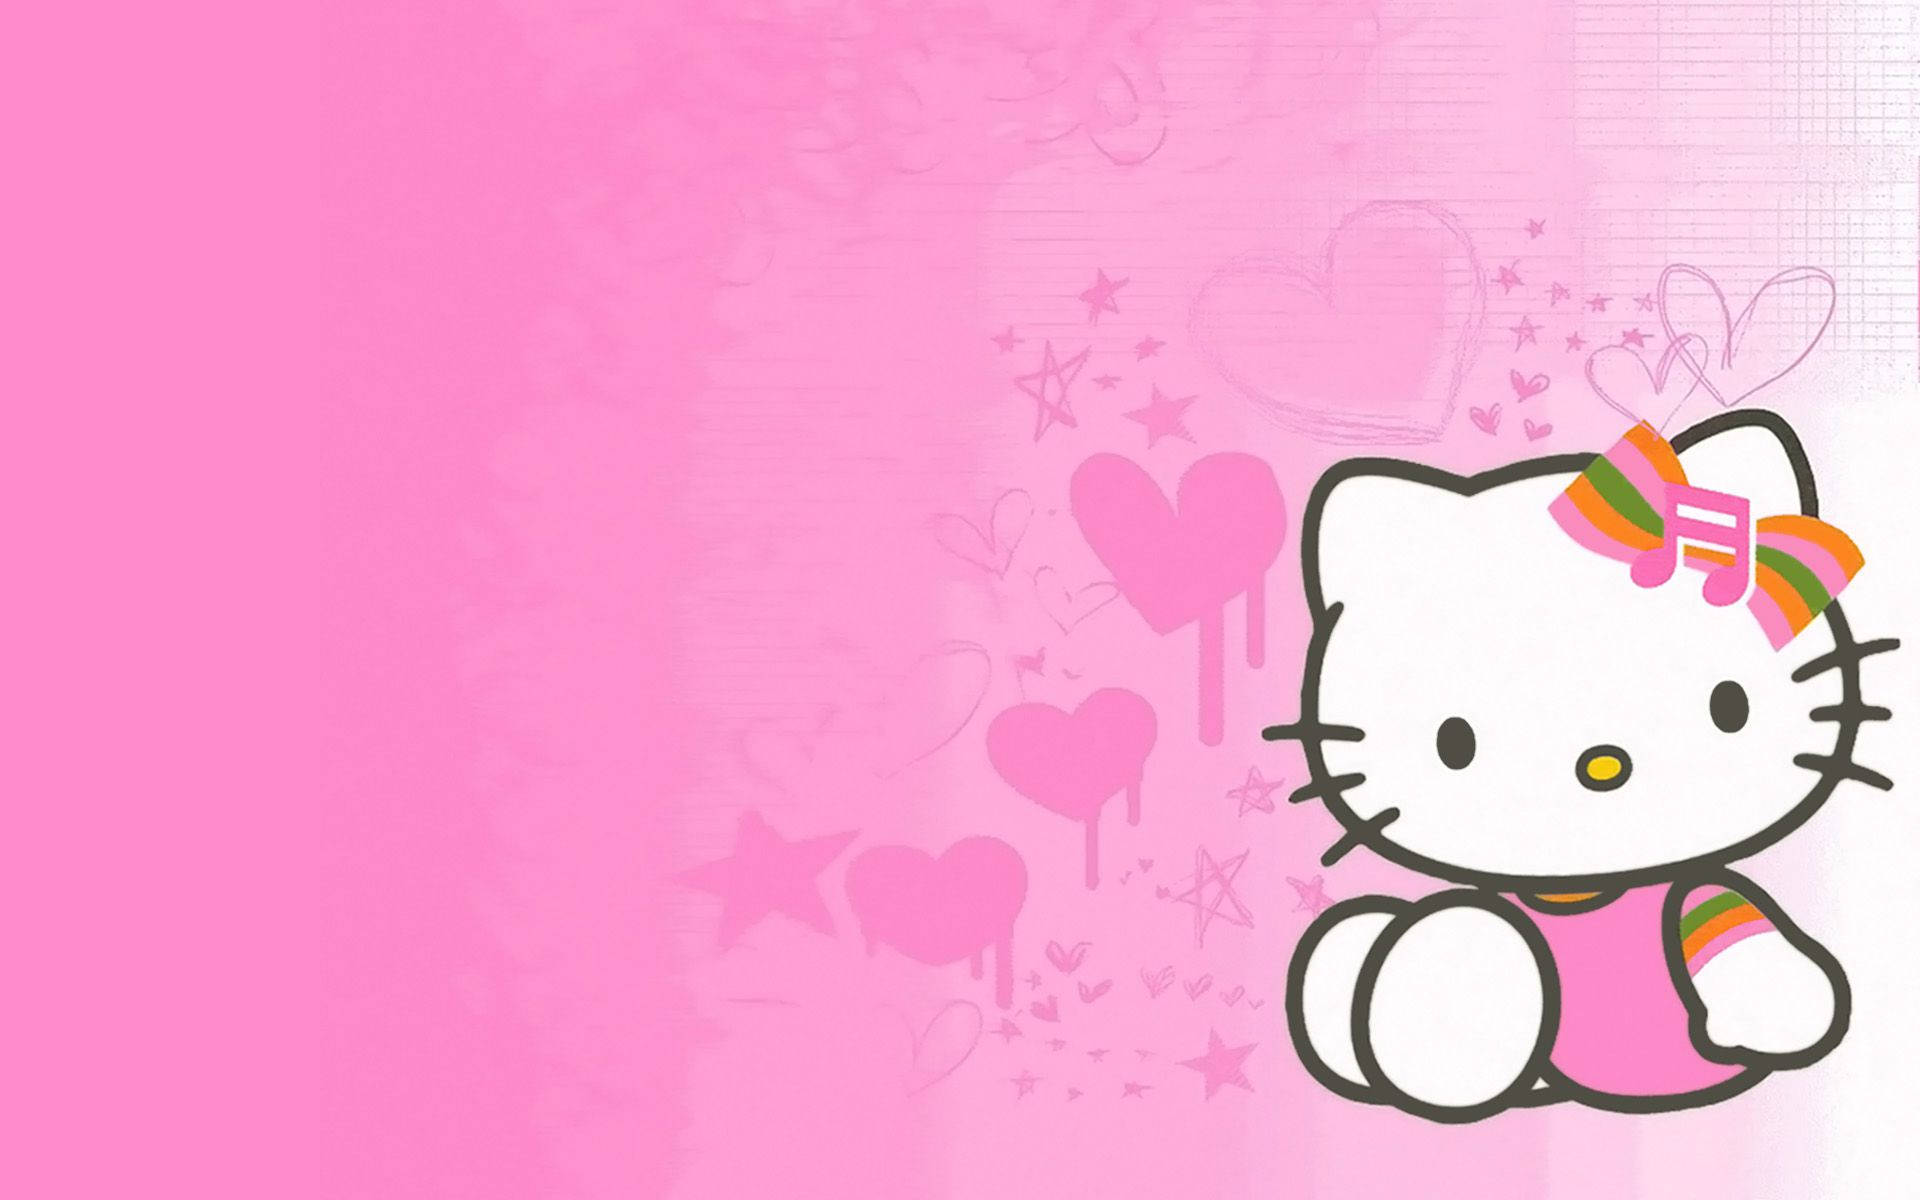 Free Hello Kitty Wallpaper Downloads, Hello Kitty Wallpaper for FREE